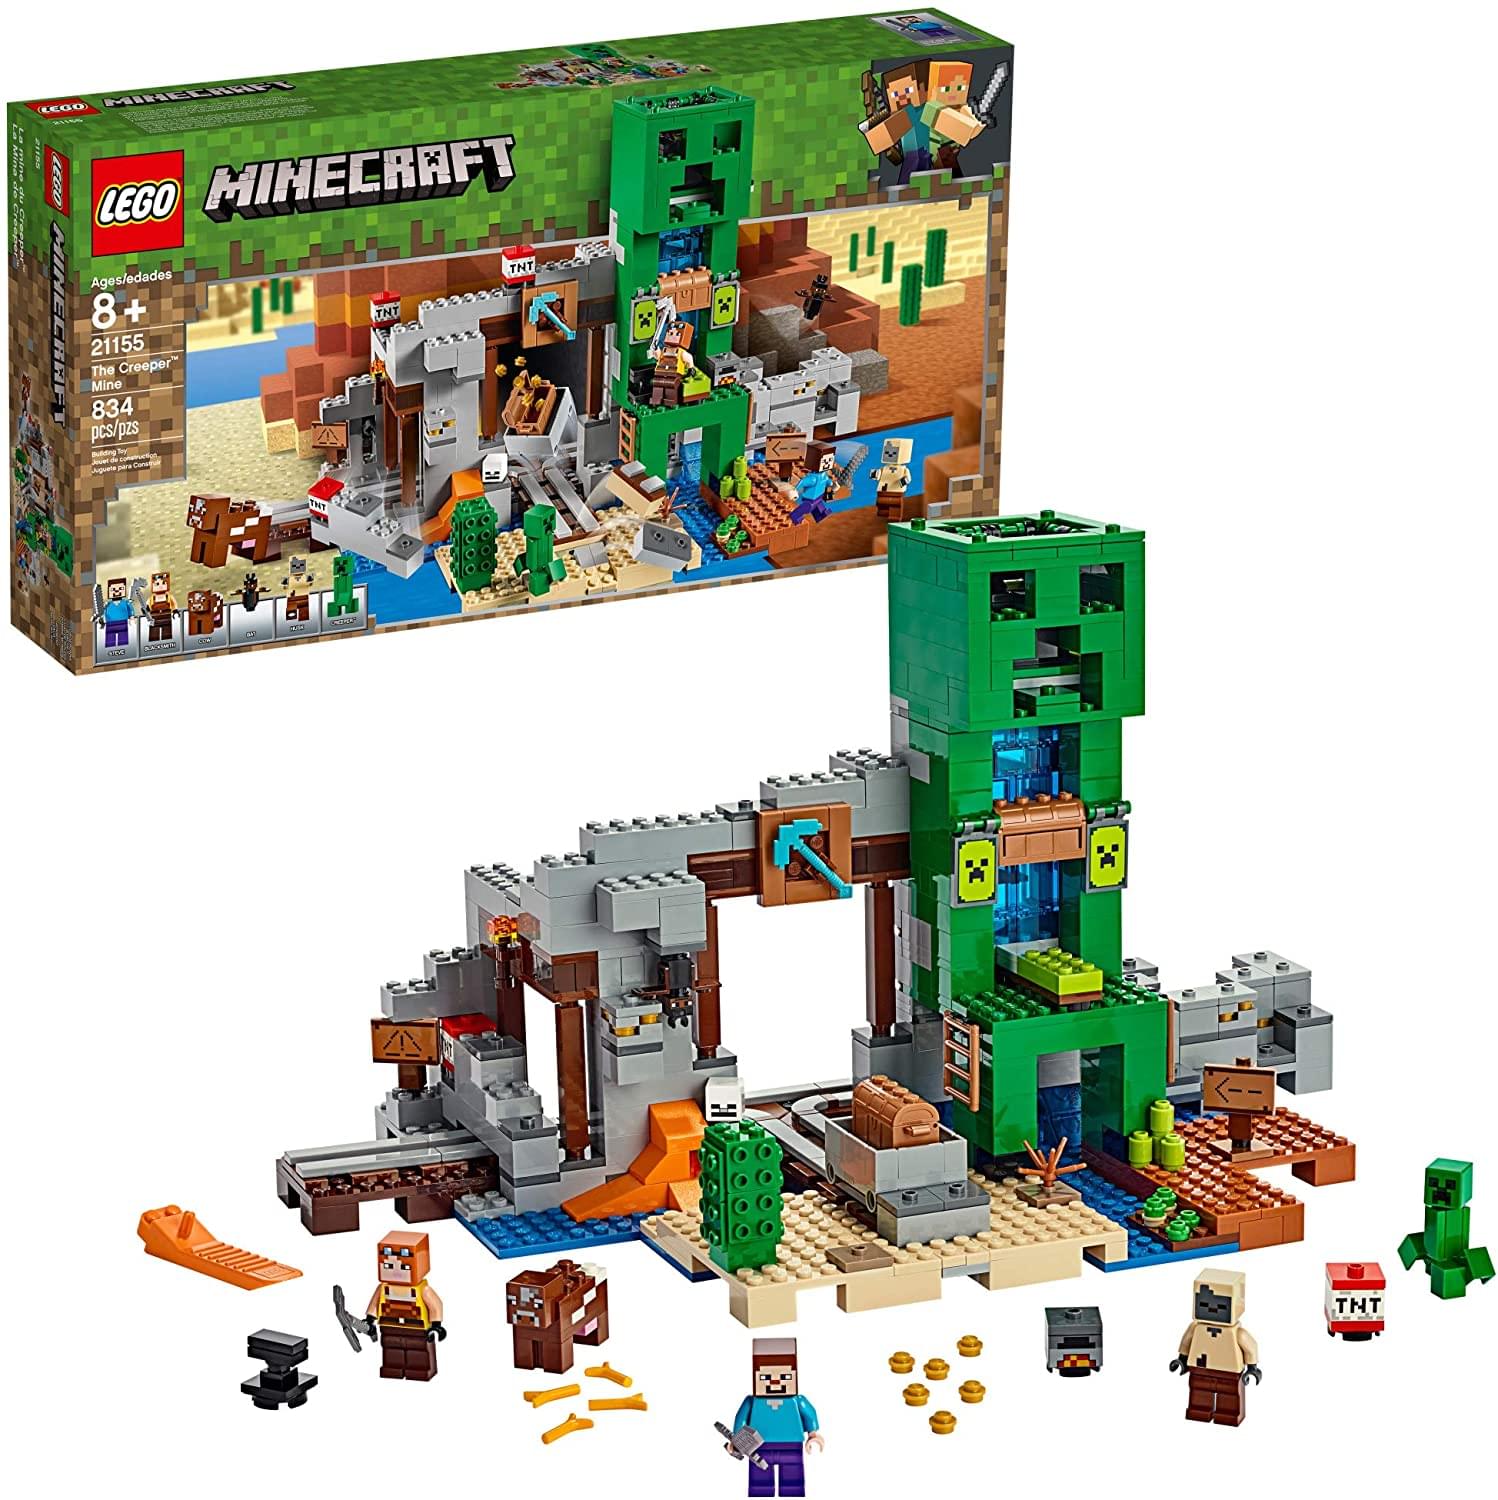 LEGO Minecraft 21155 The Creeper Mine 834 Piece Building Set